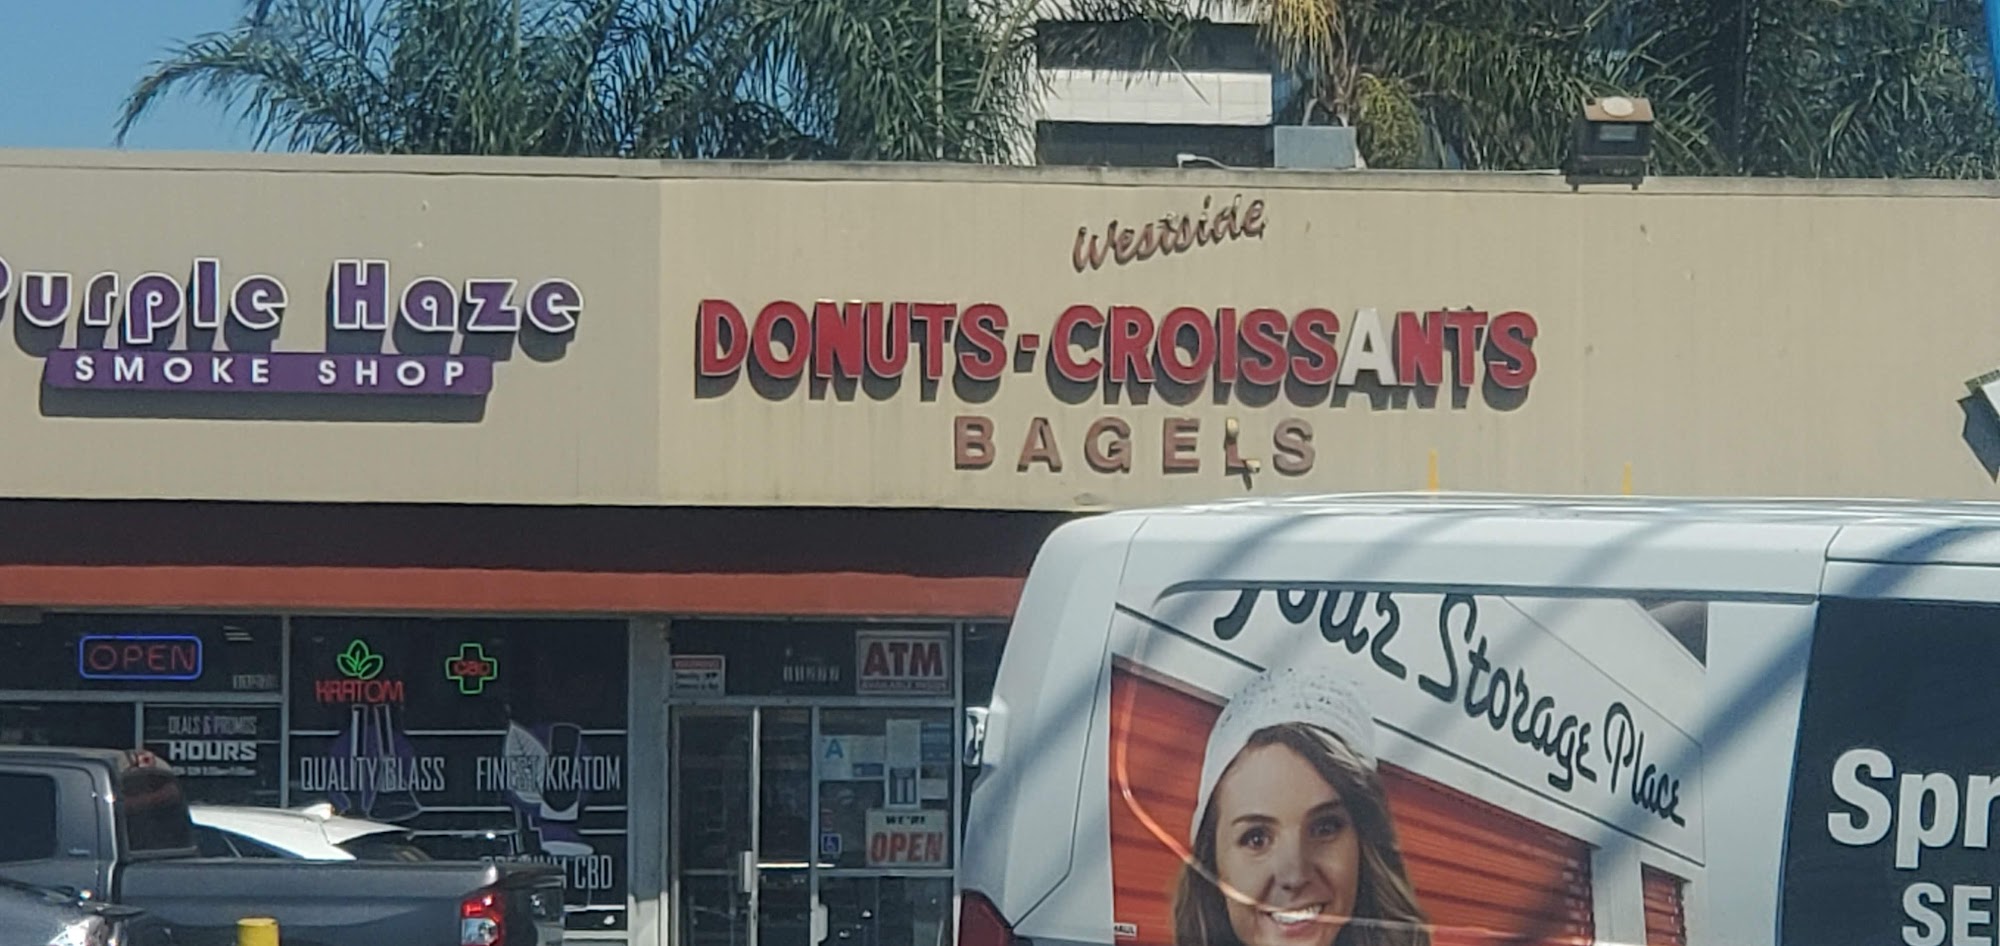 Westside Donuts & Croissants